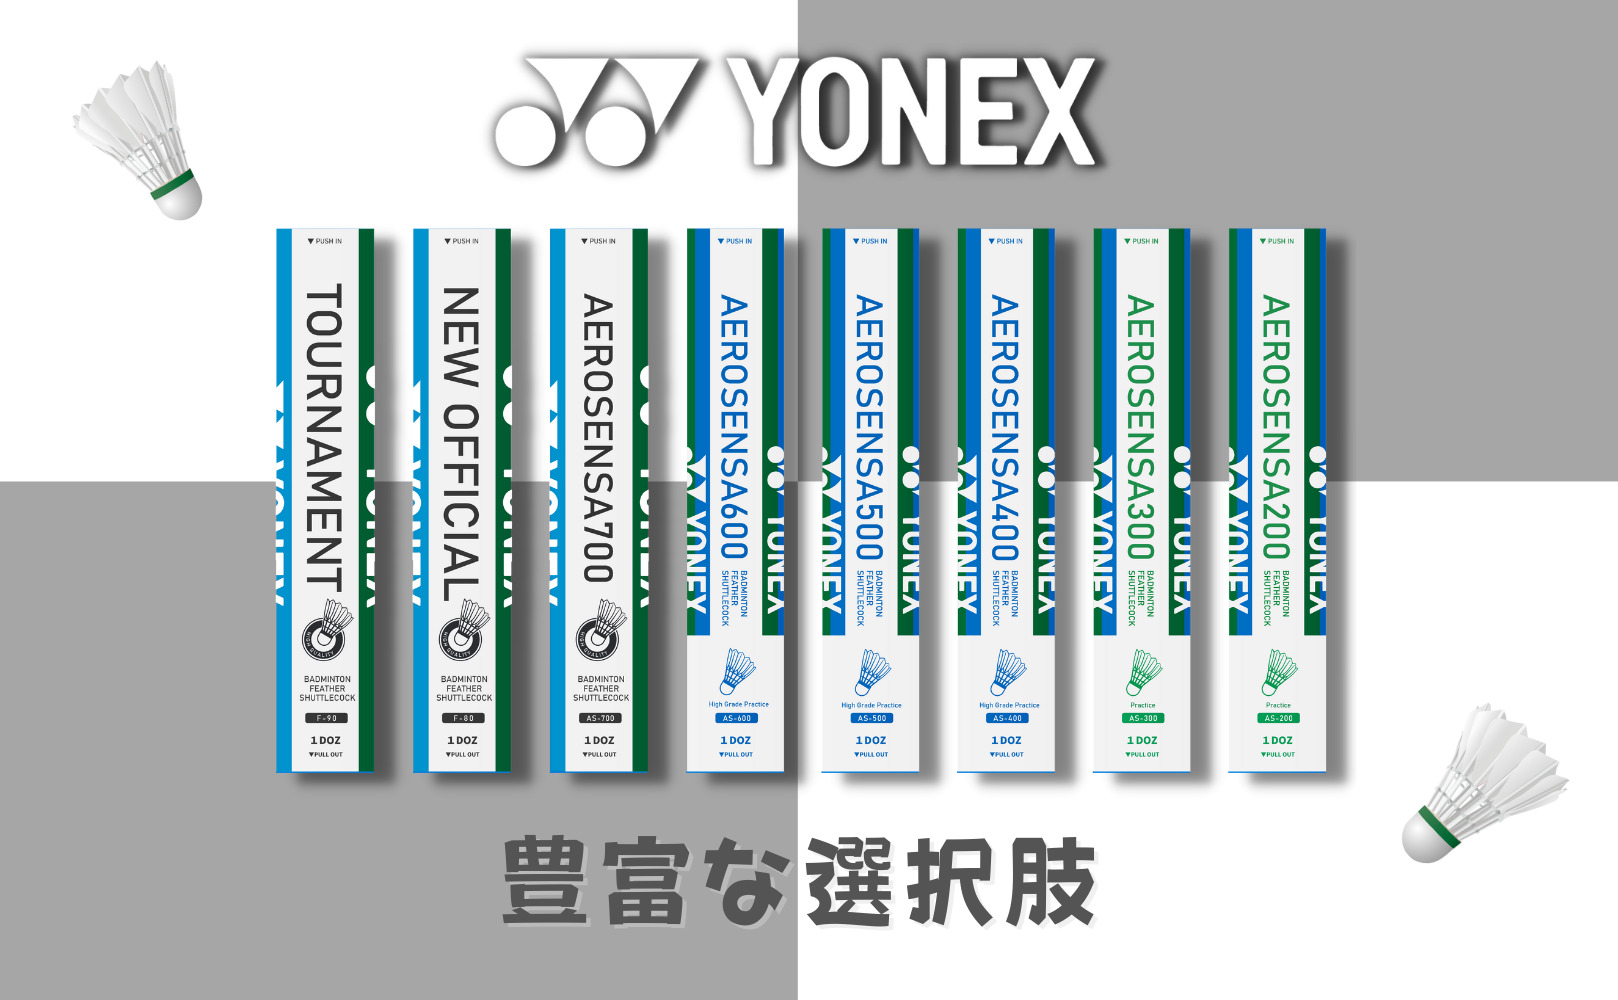 YONEXのシャトルラインナップ